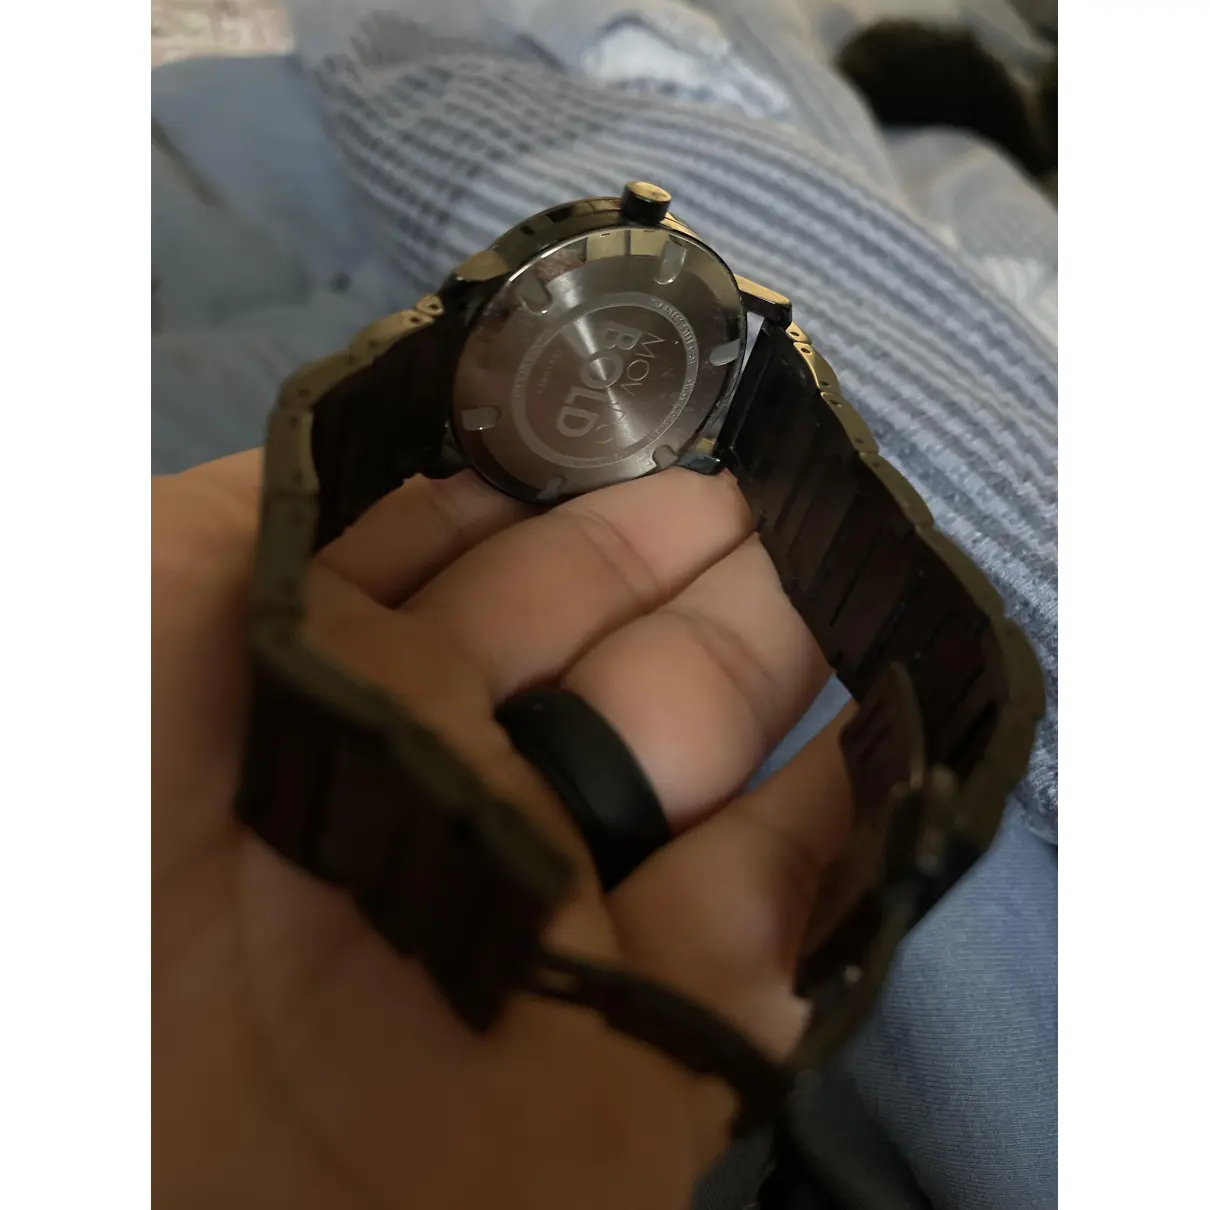 Buy Movado Watch online